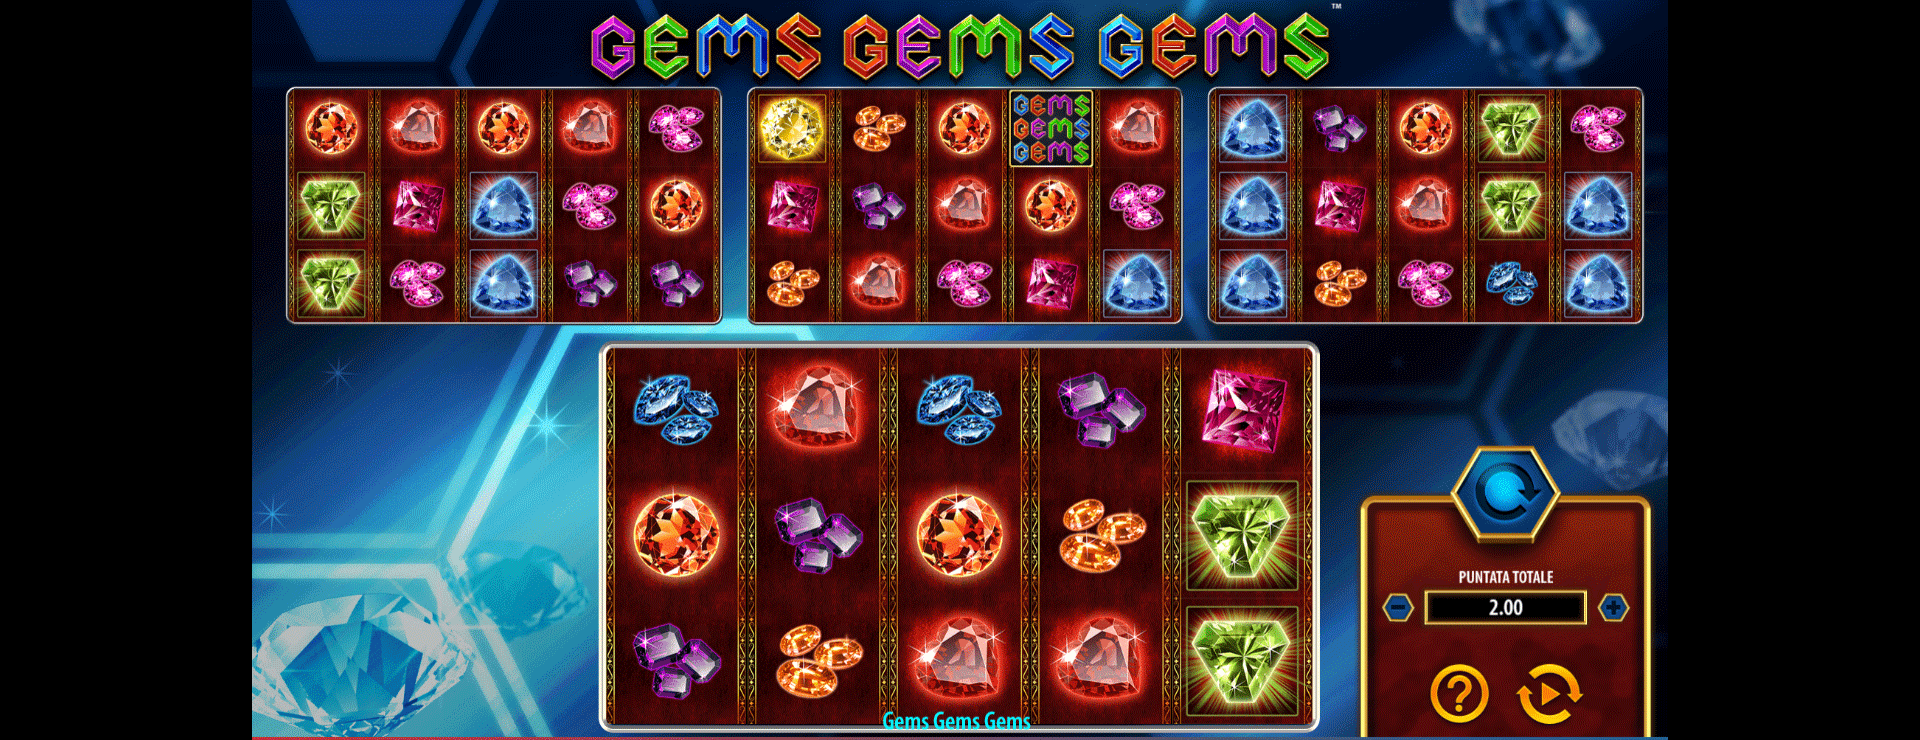 griglia della slot online gems gems gems